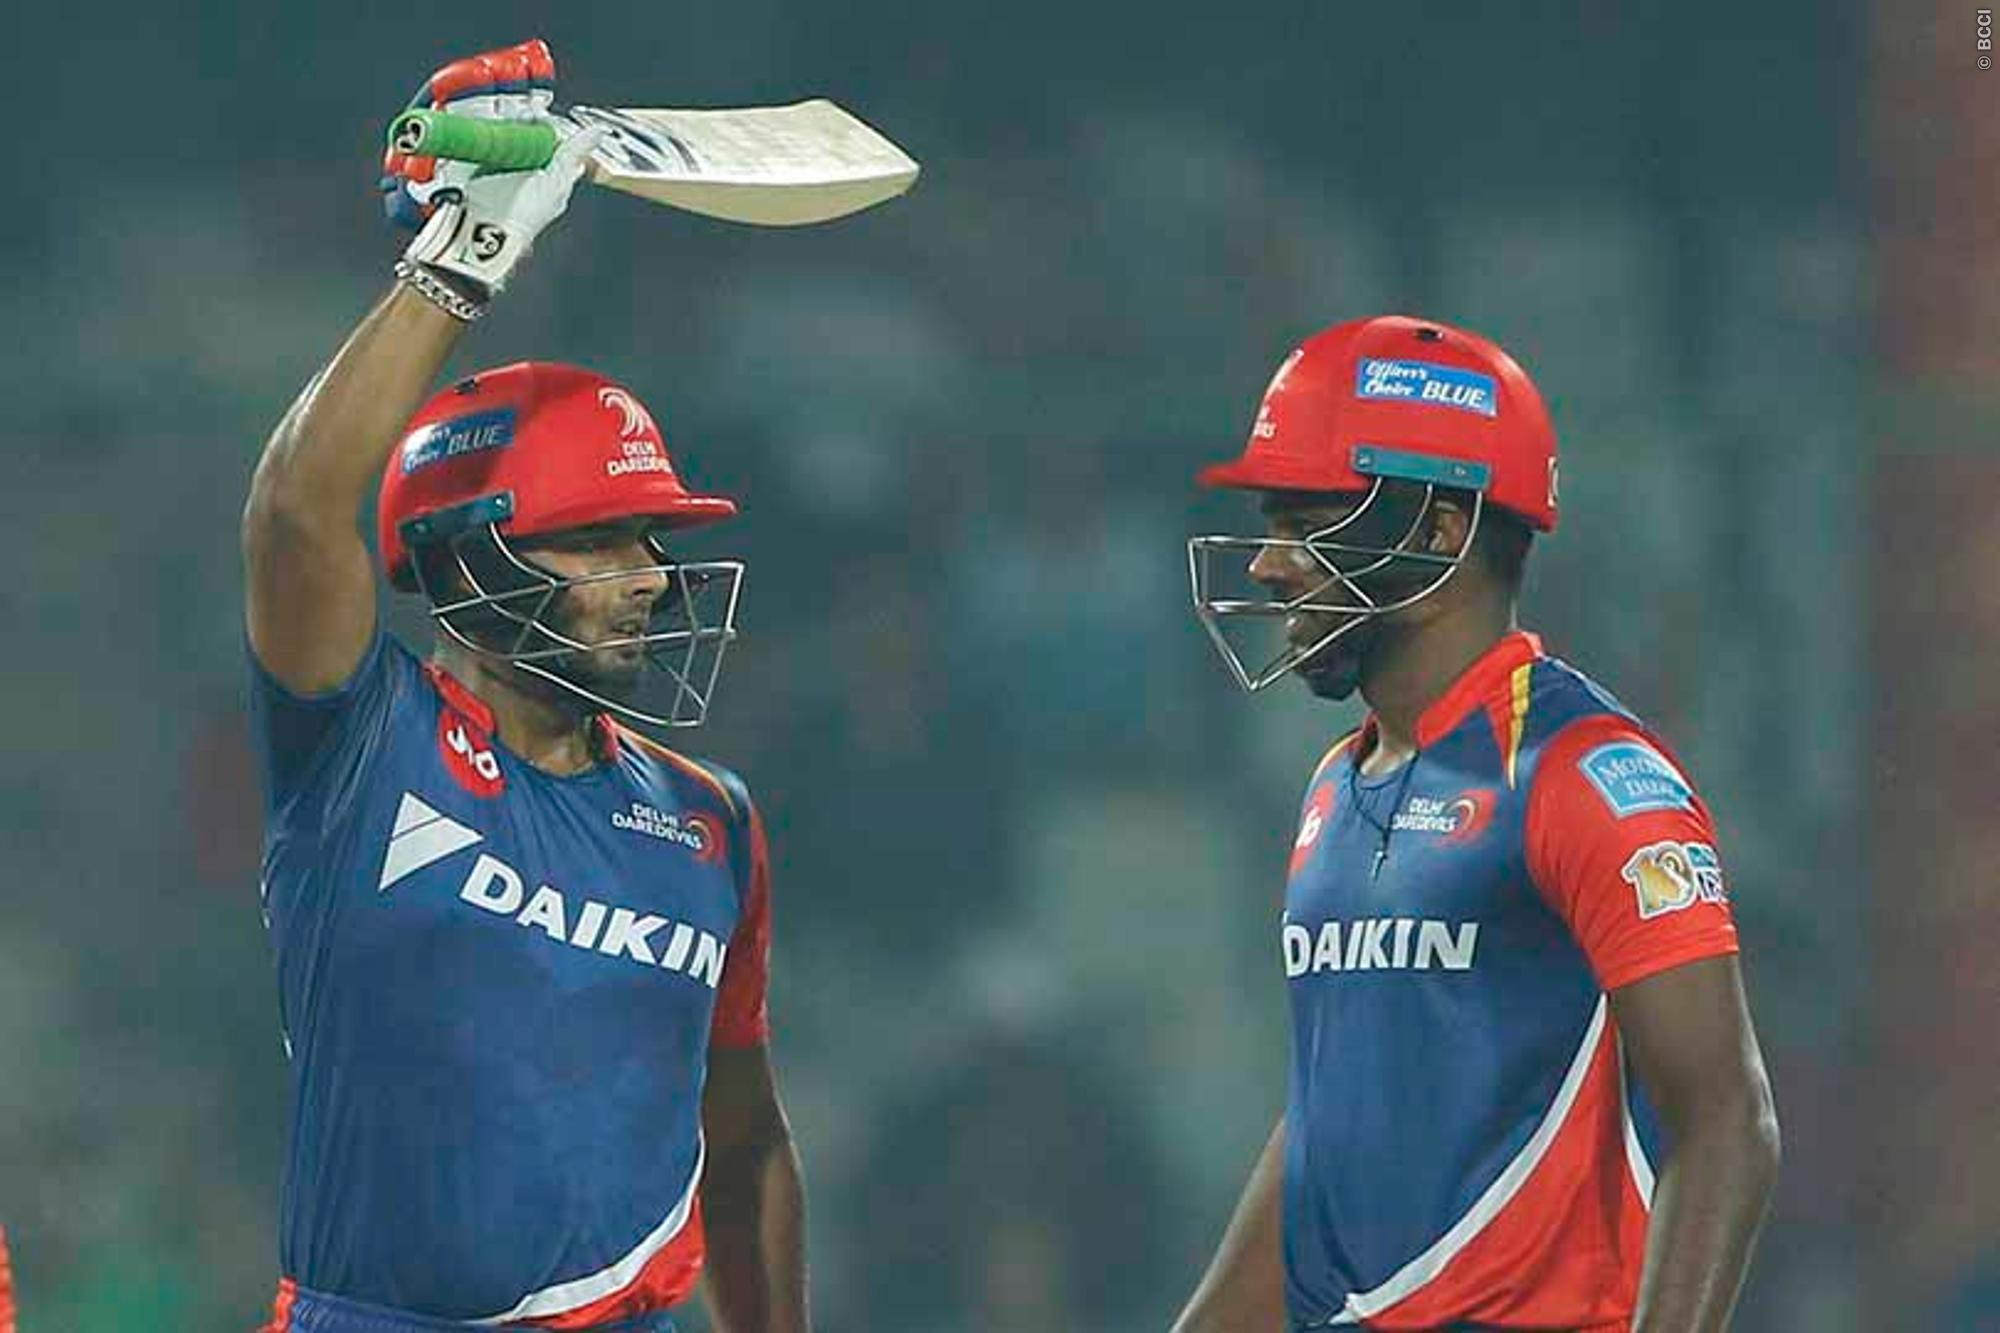 IPL 2017 | Pant and Samson thrash Gujarat into submission